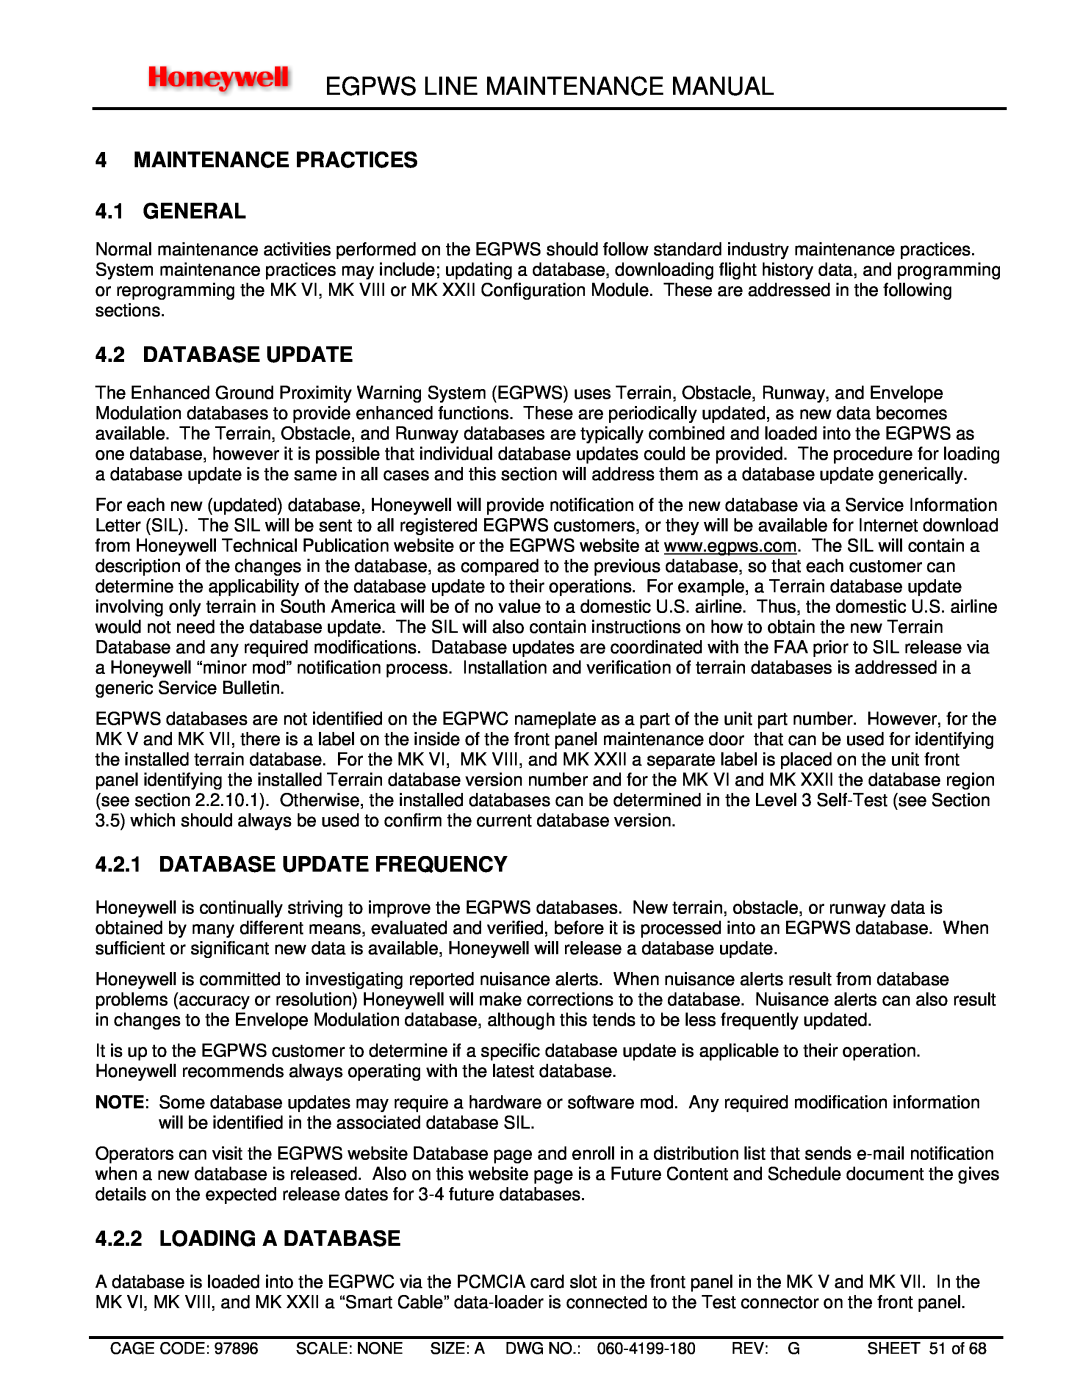 Honeywell MK VIII, MK XXII manual MAINTENANCE PRACTICES 4.1 GENERAL, Database Update Frequency, Loading A Database 